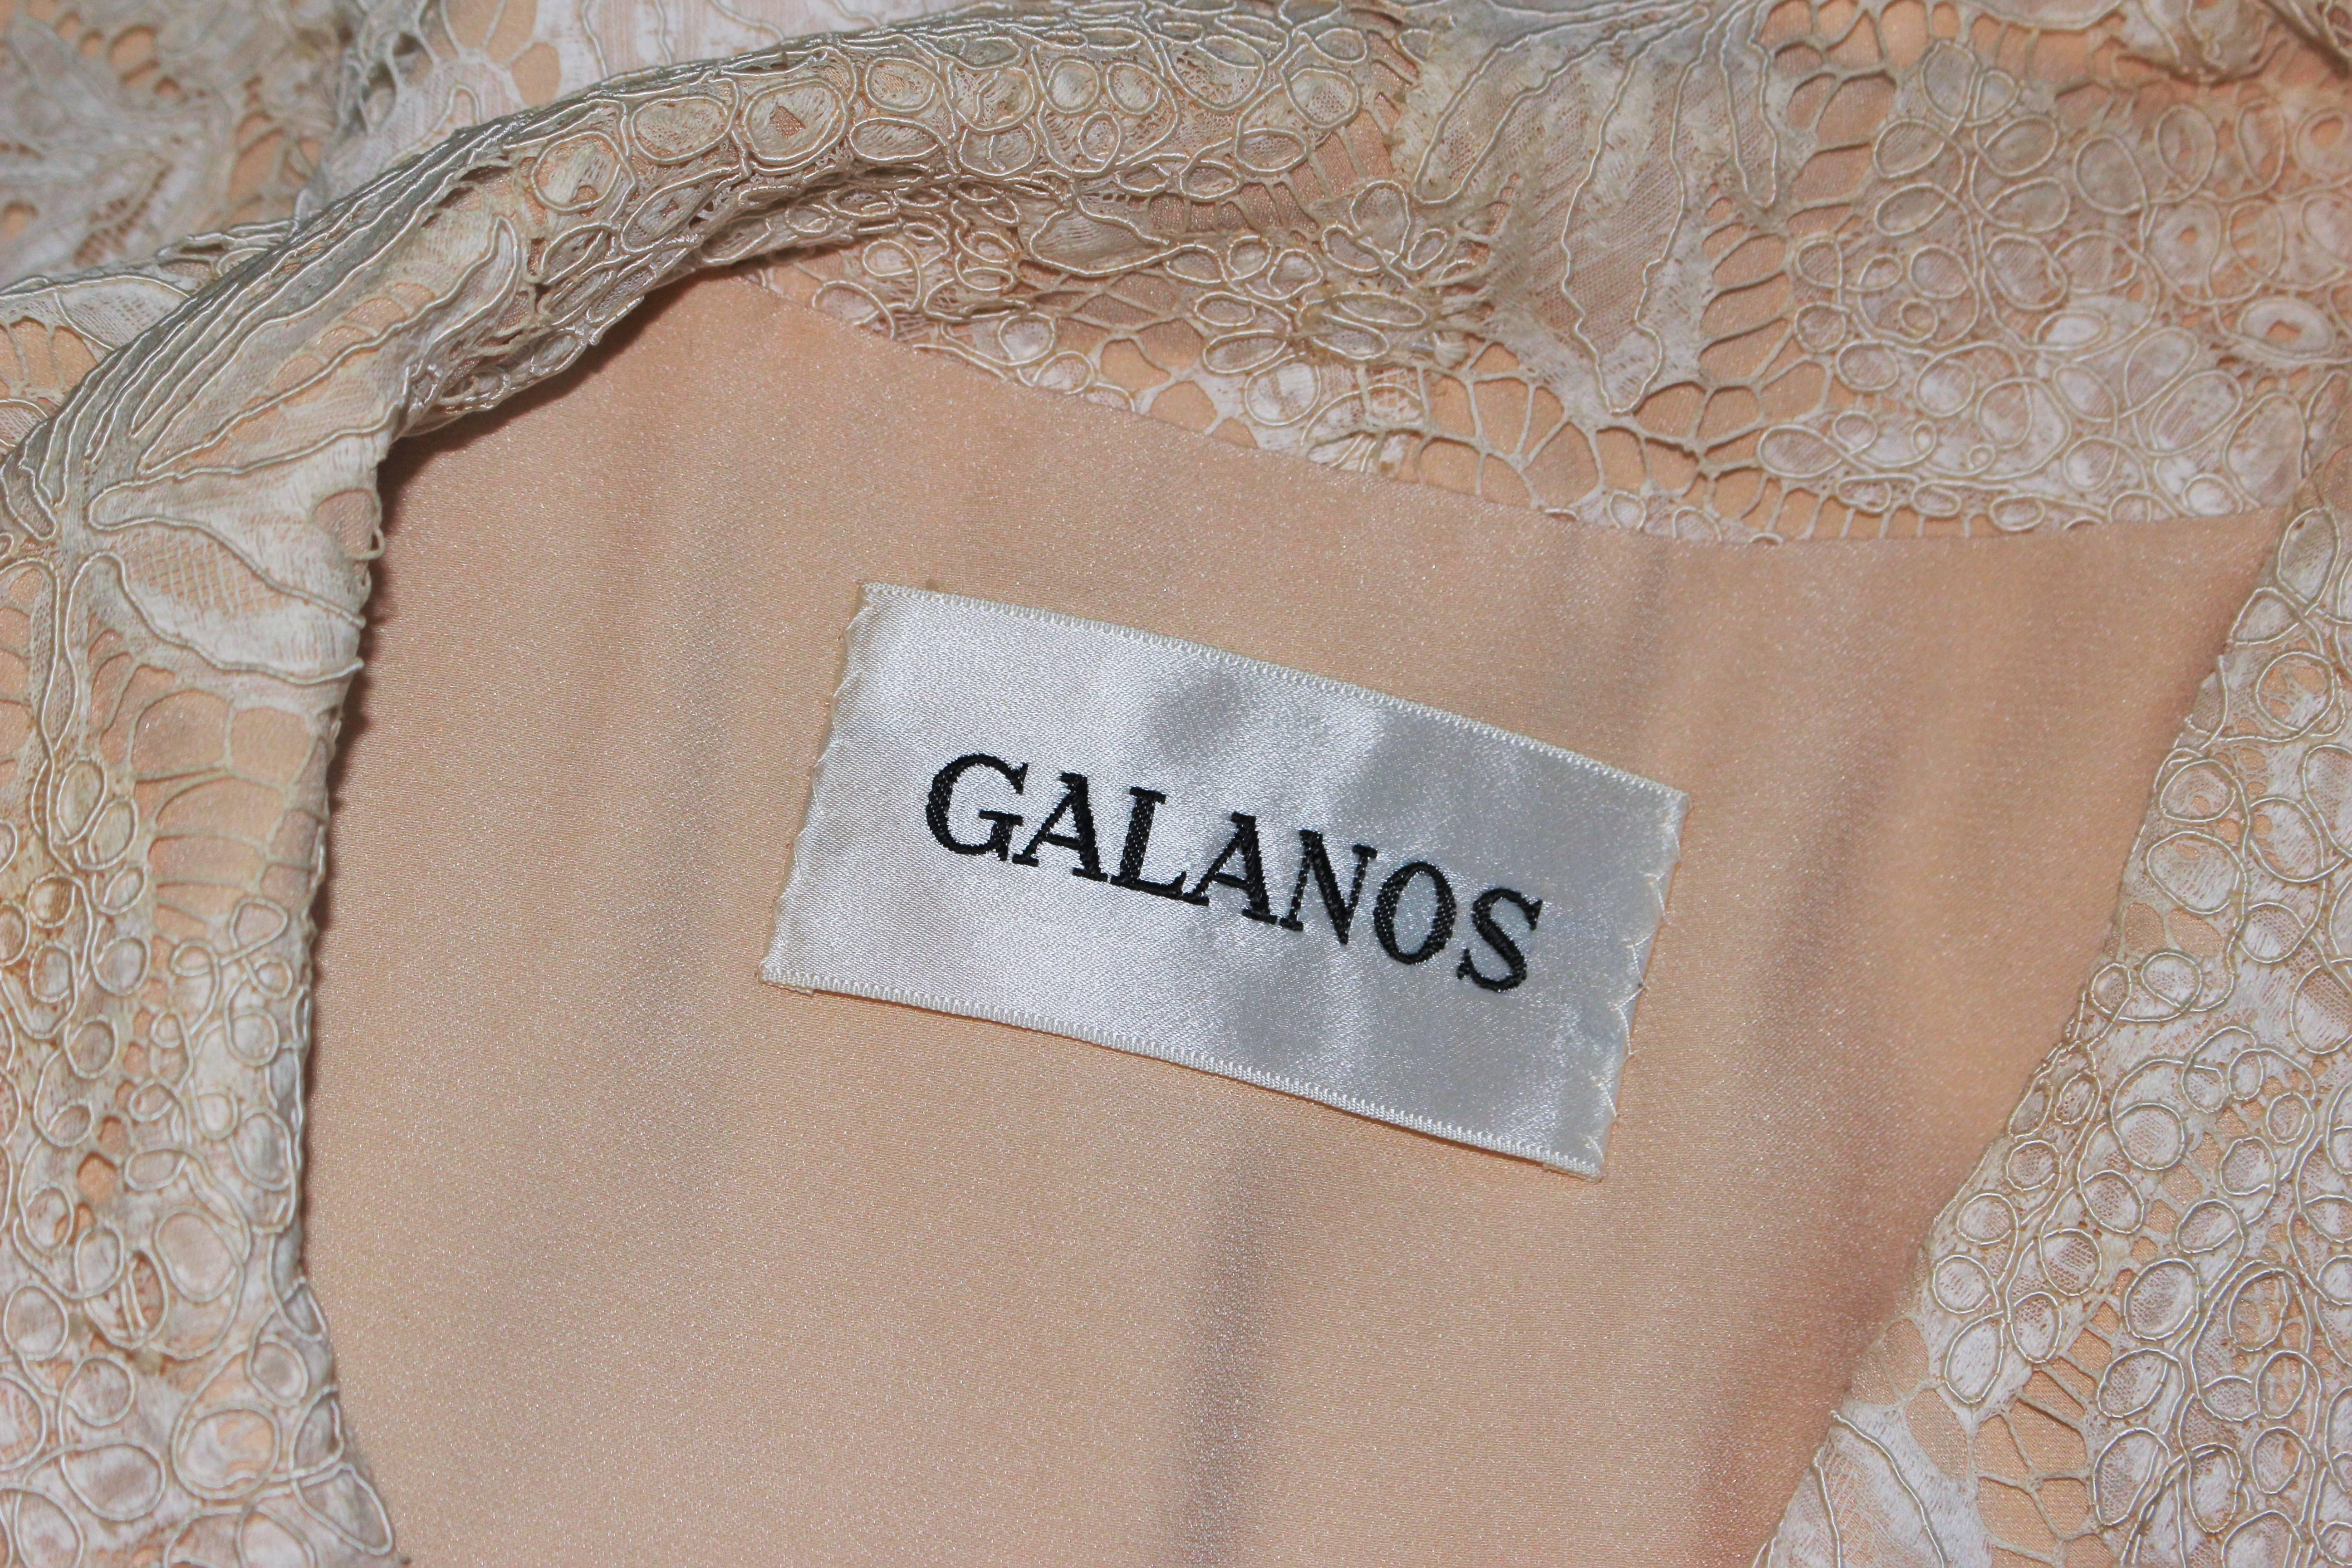 GALANOS Antique Cream Floral Lace Jacket Size 6-8 For Sale 2